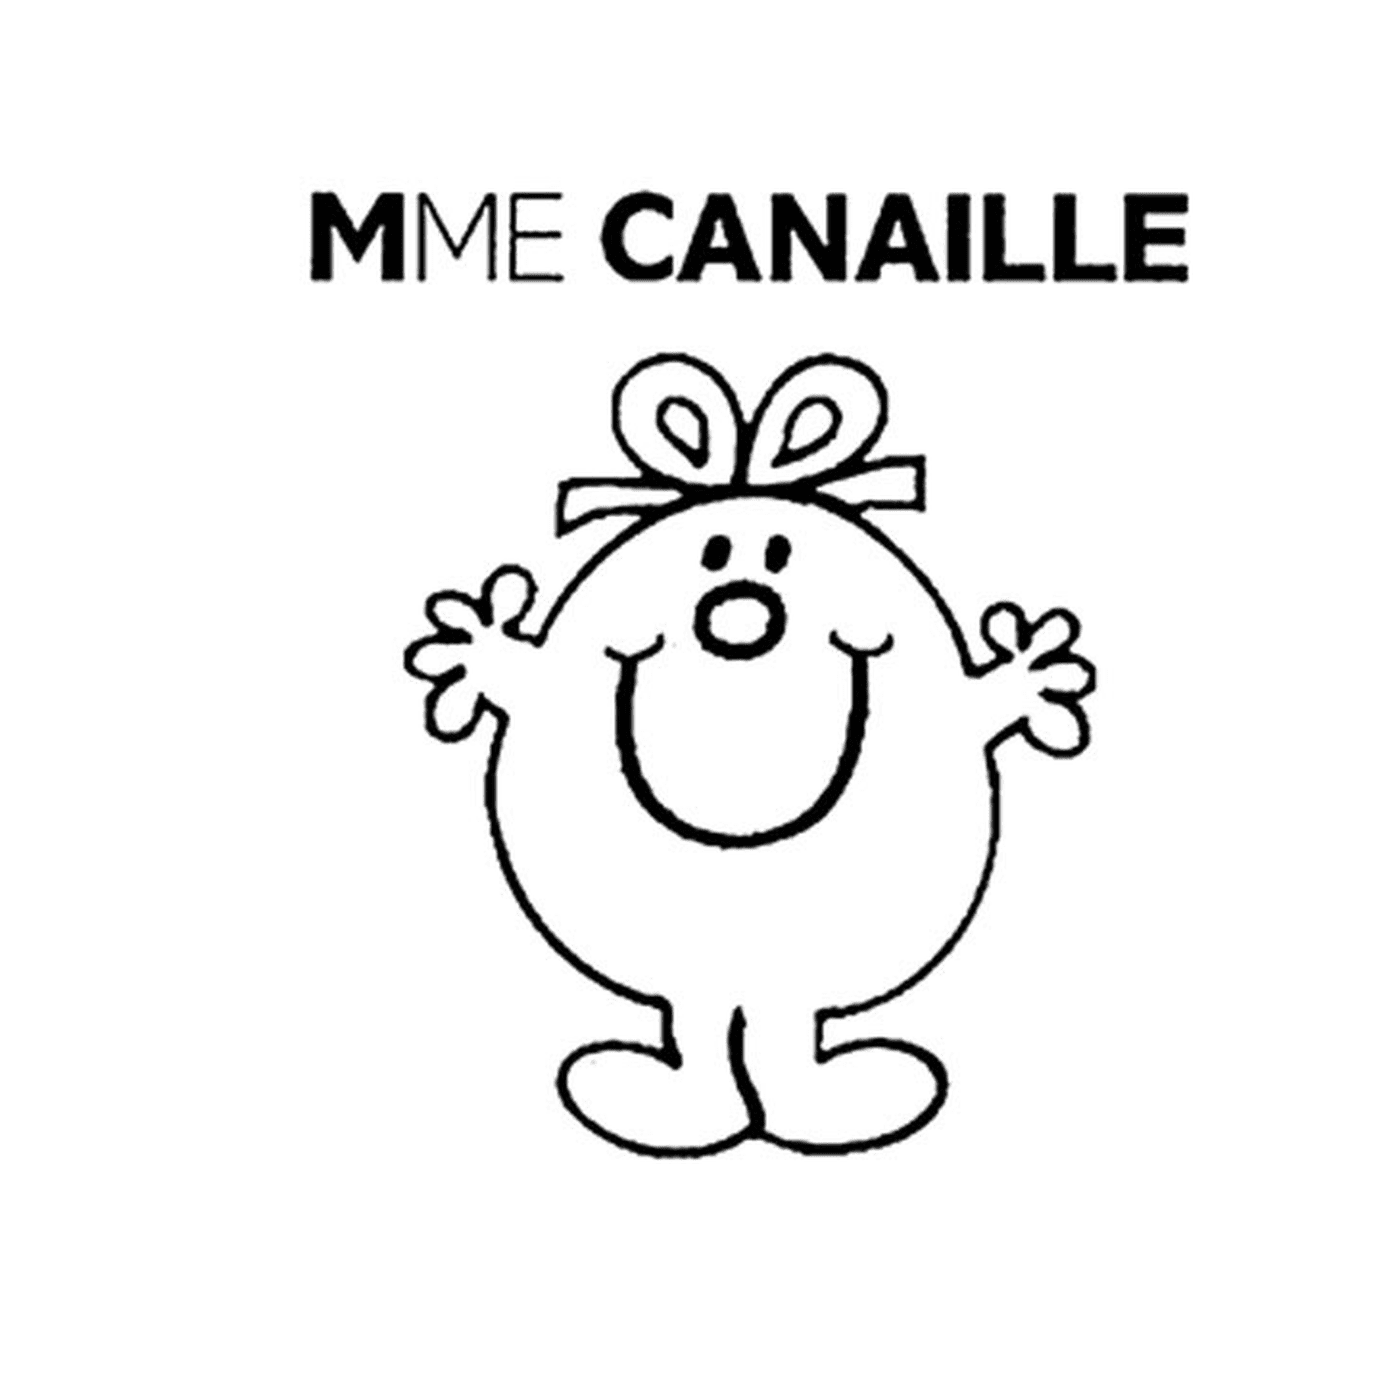 monsieur madame canaille 2